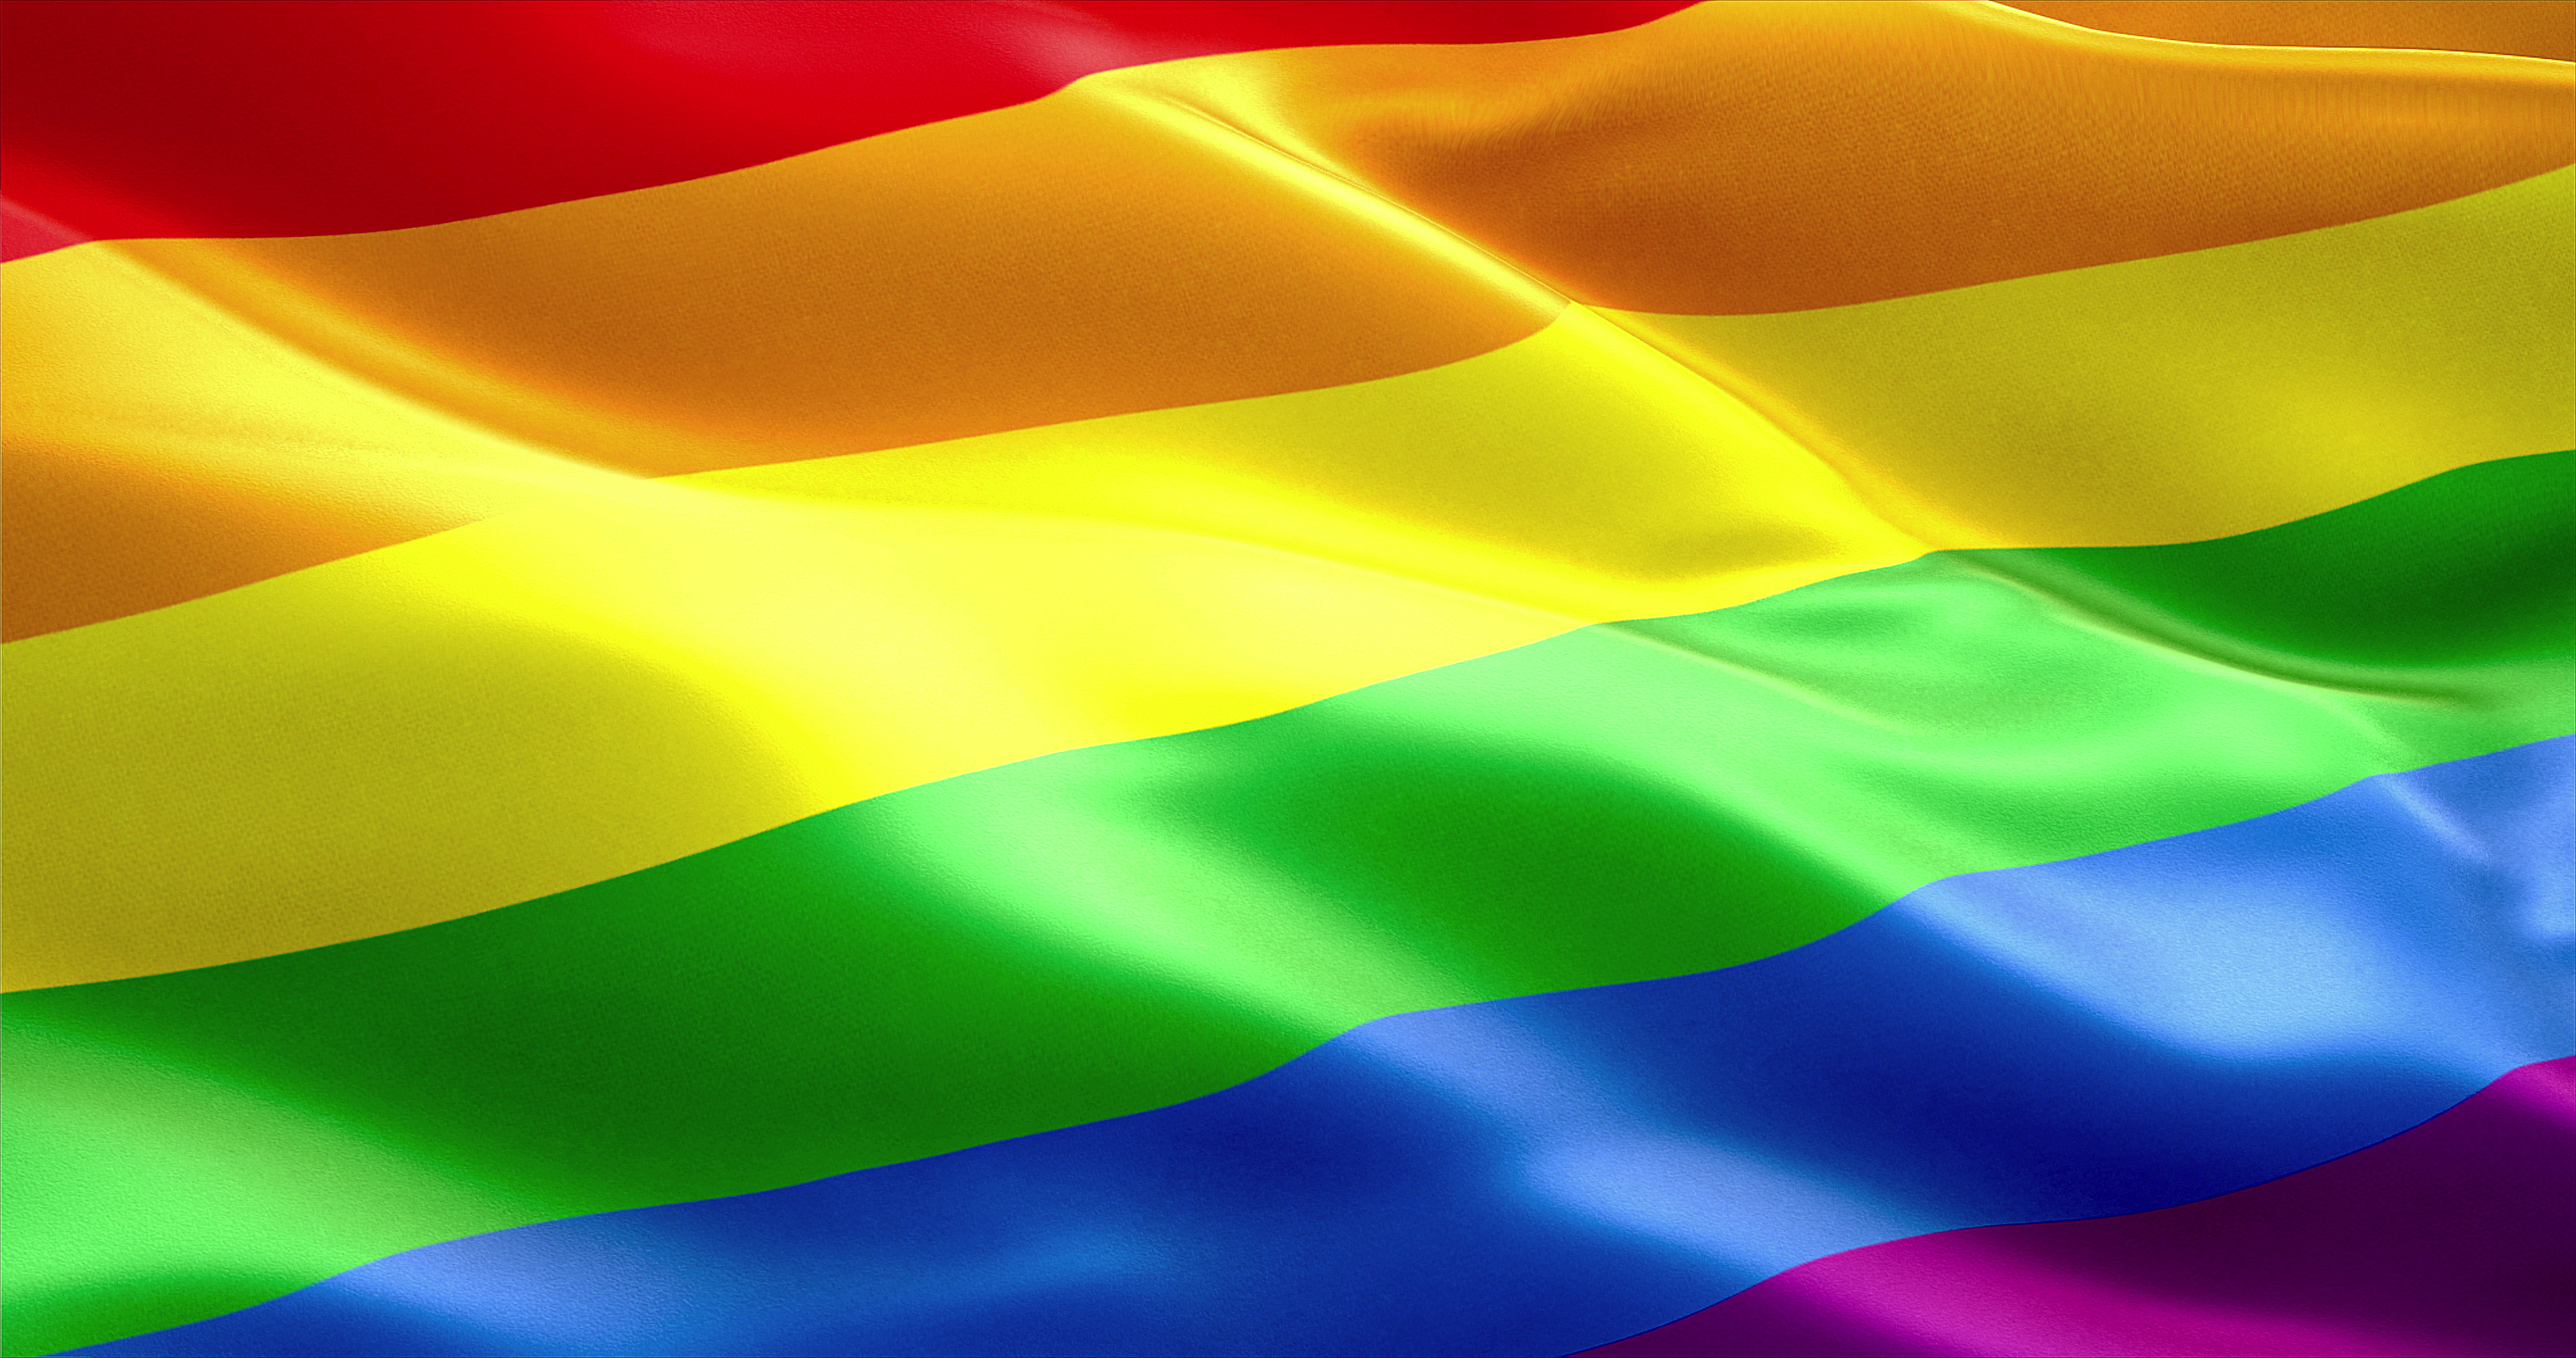 Pride flag to be raised at City Hall - Dallas City News